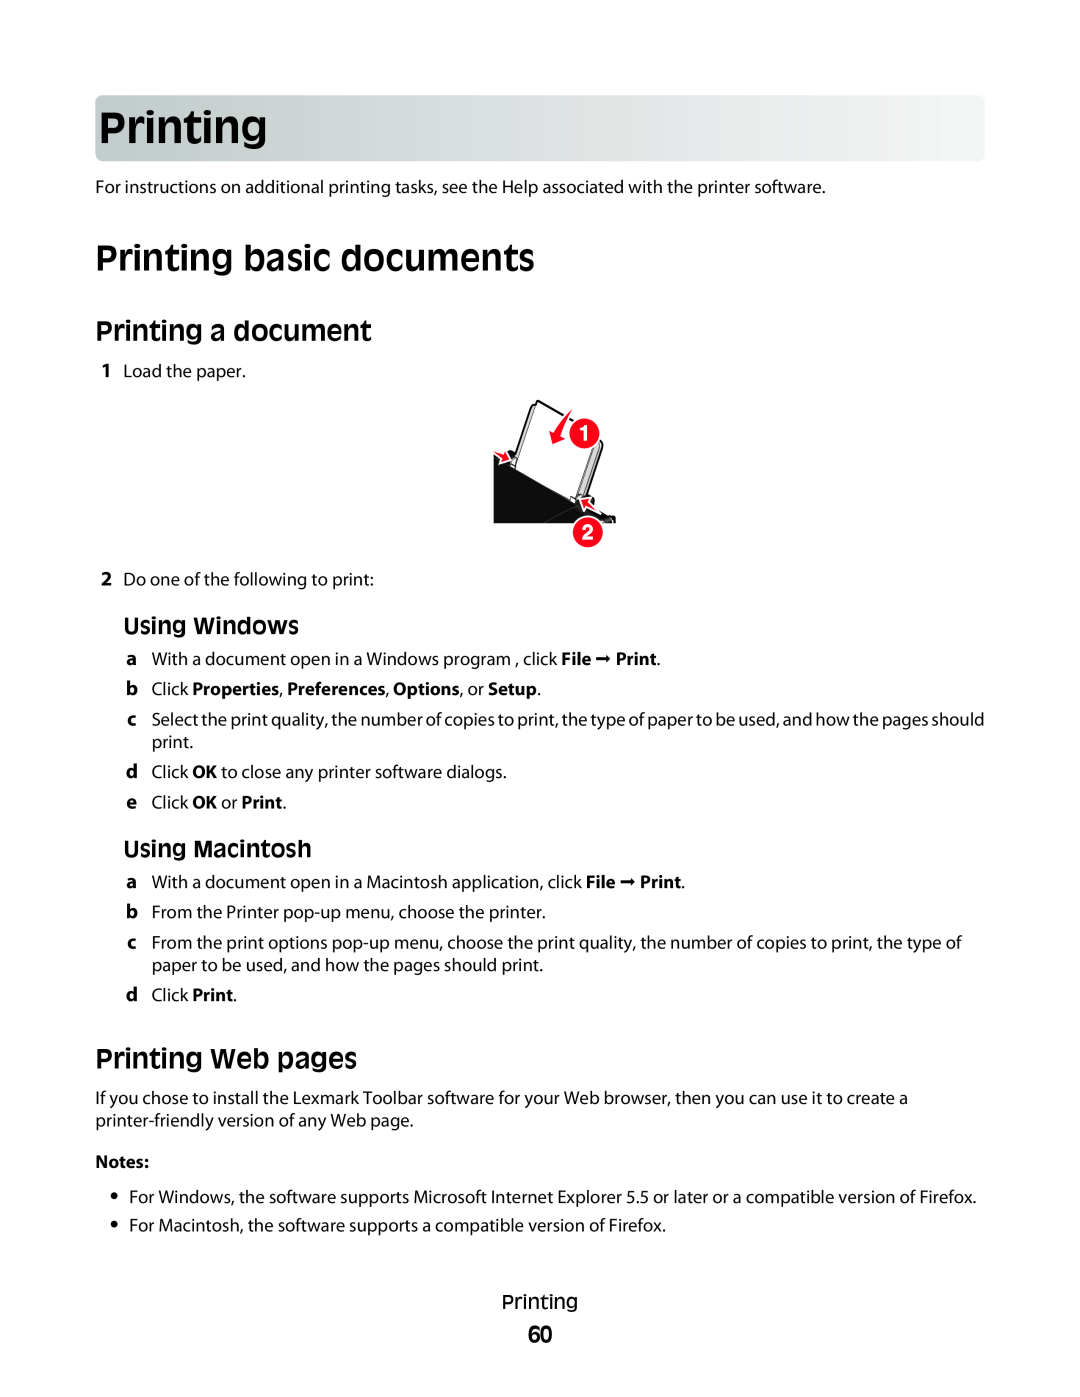 Lexmark 4600 Prin ting, Printing basic documents, Printing a document, Printing Web pages, Using Windows, Using Macintosh 